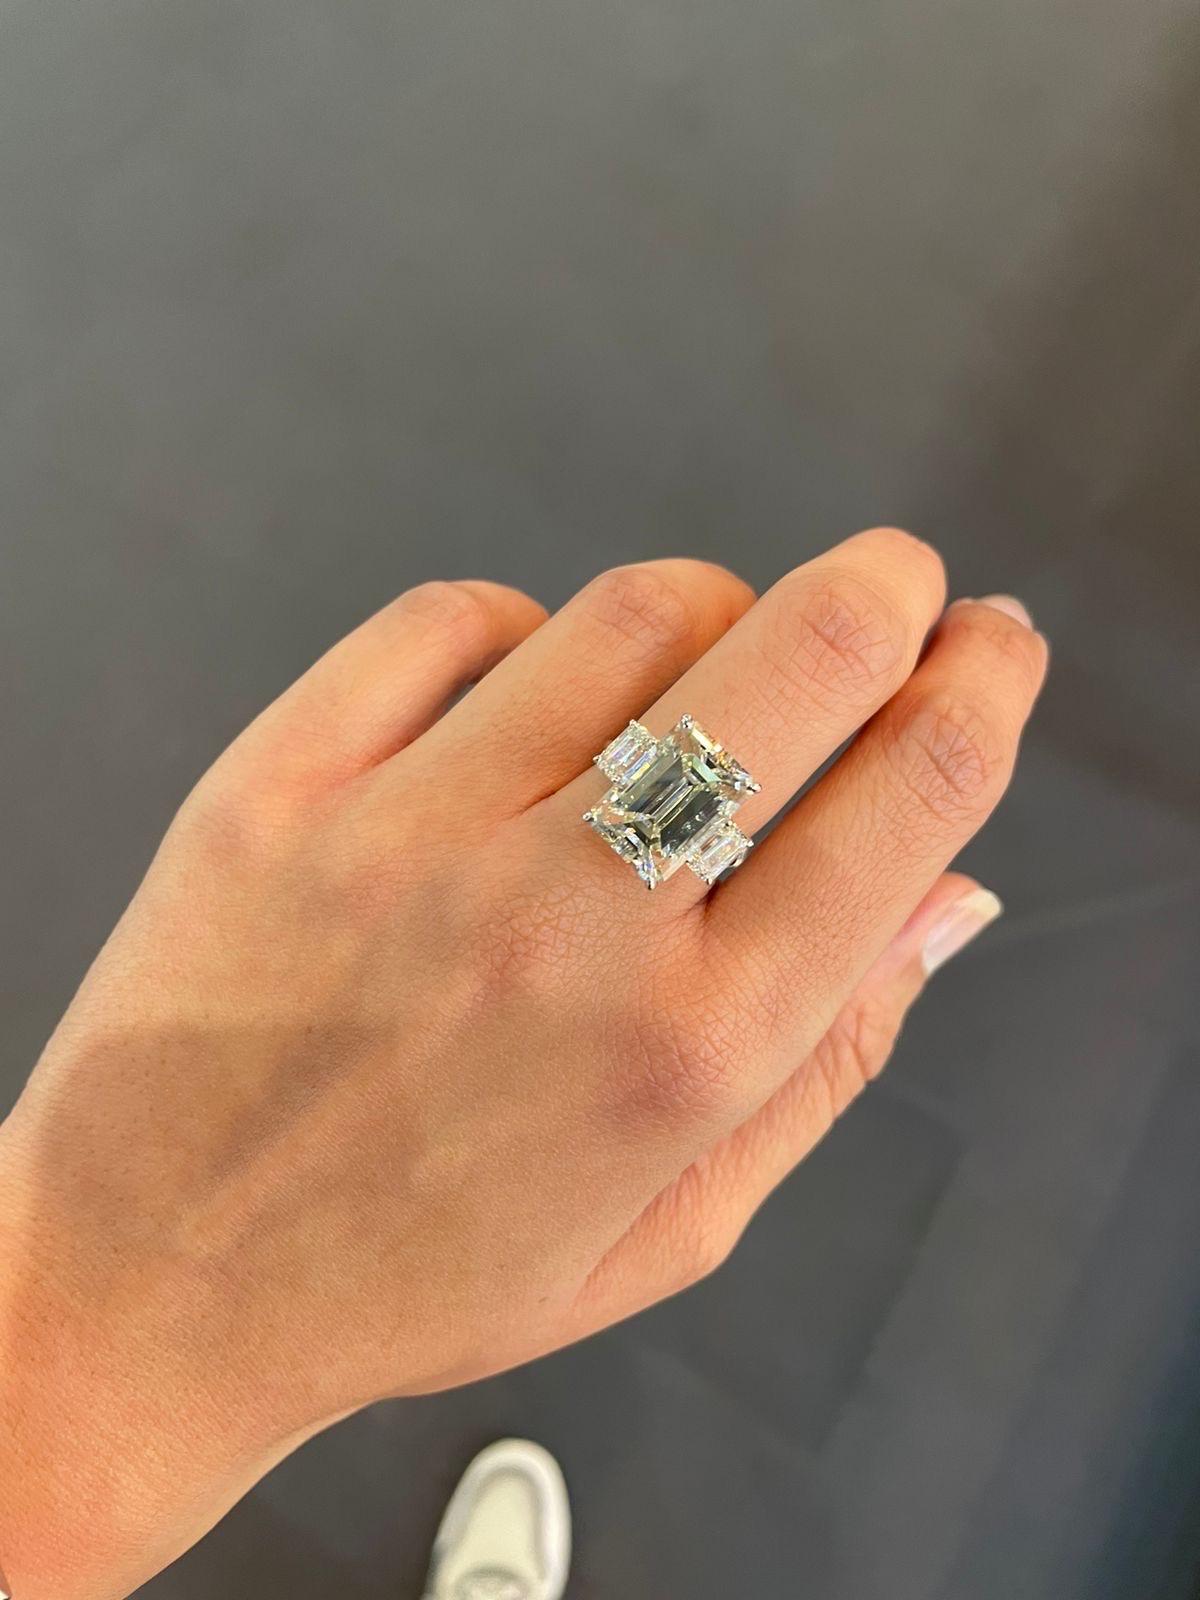 1.8 carat emerald cut diamond ring